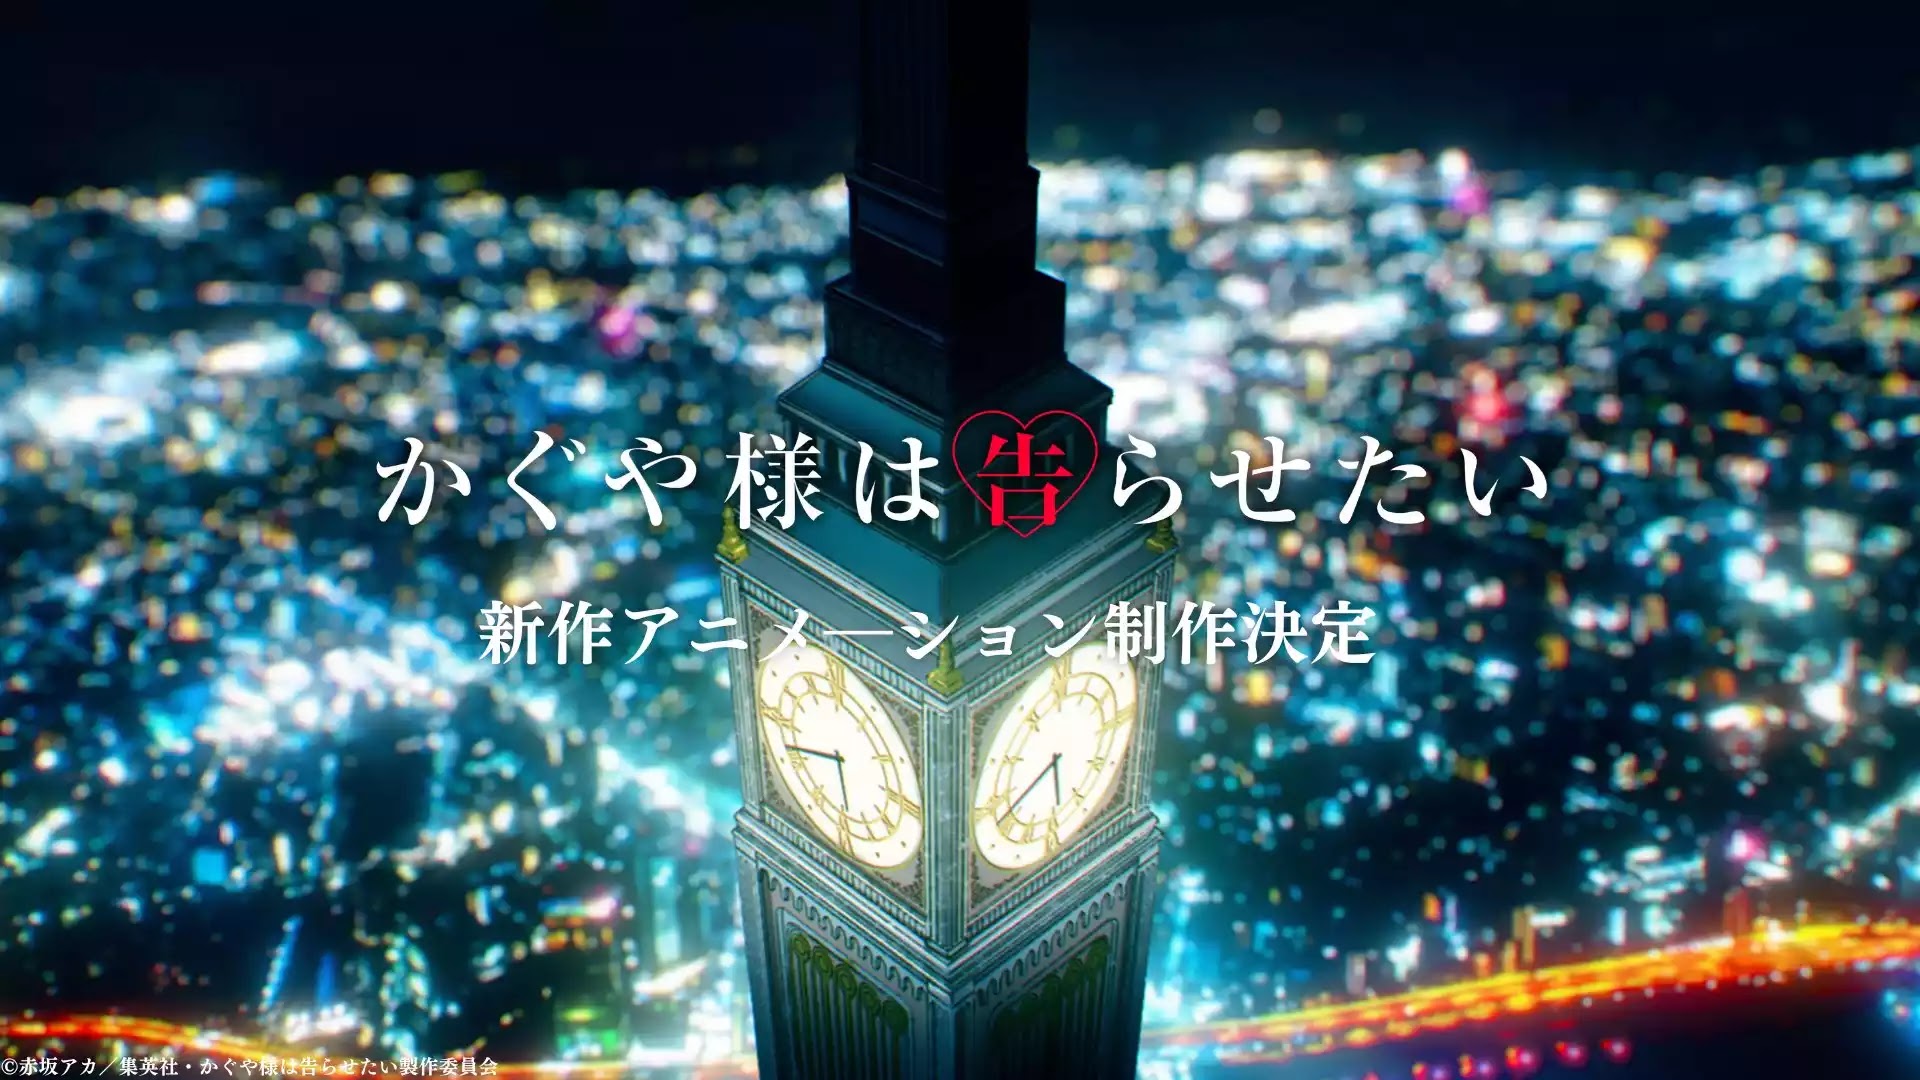 O Anime Kaguya-sama: Love is War Terá uma Nova Sequência